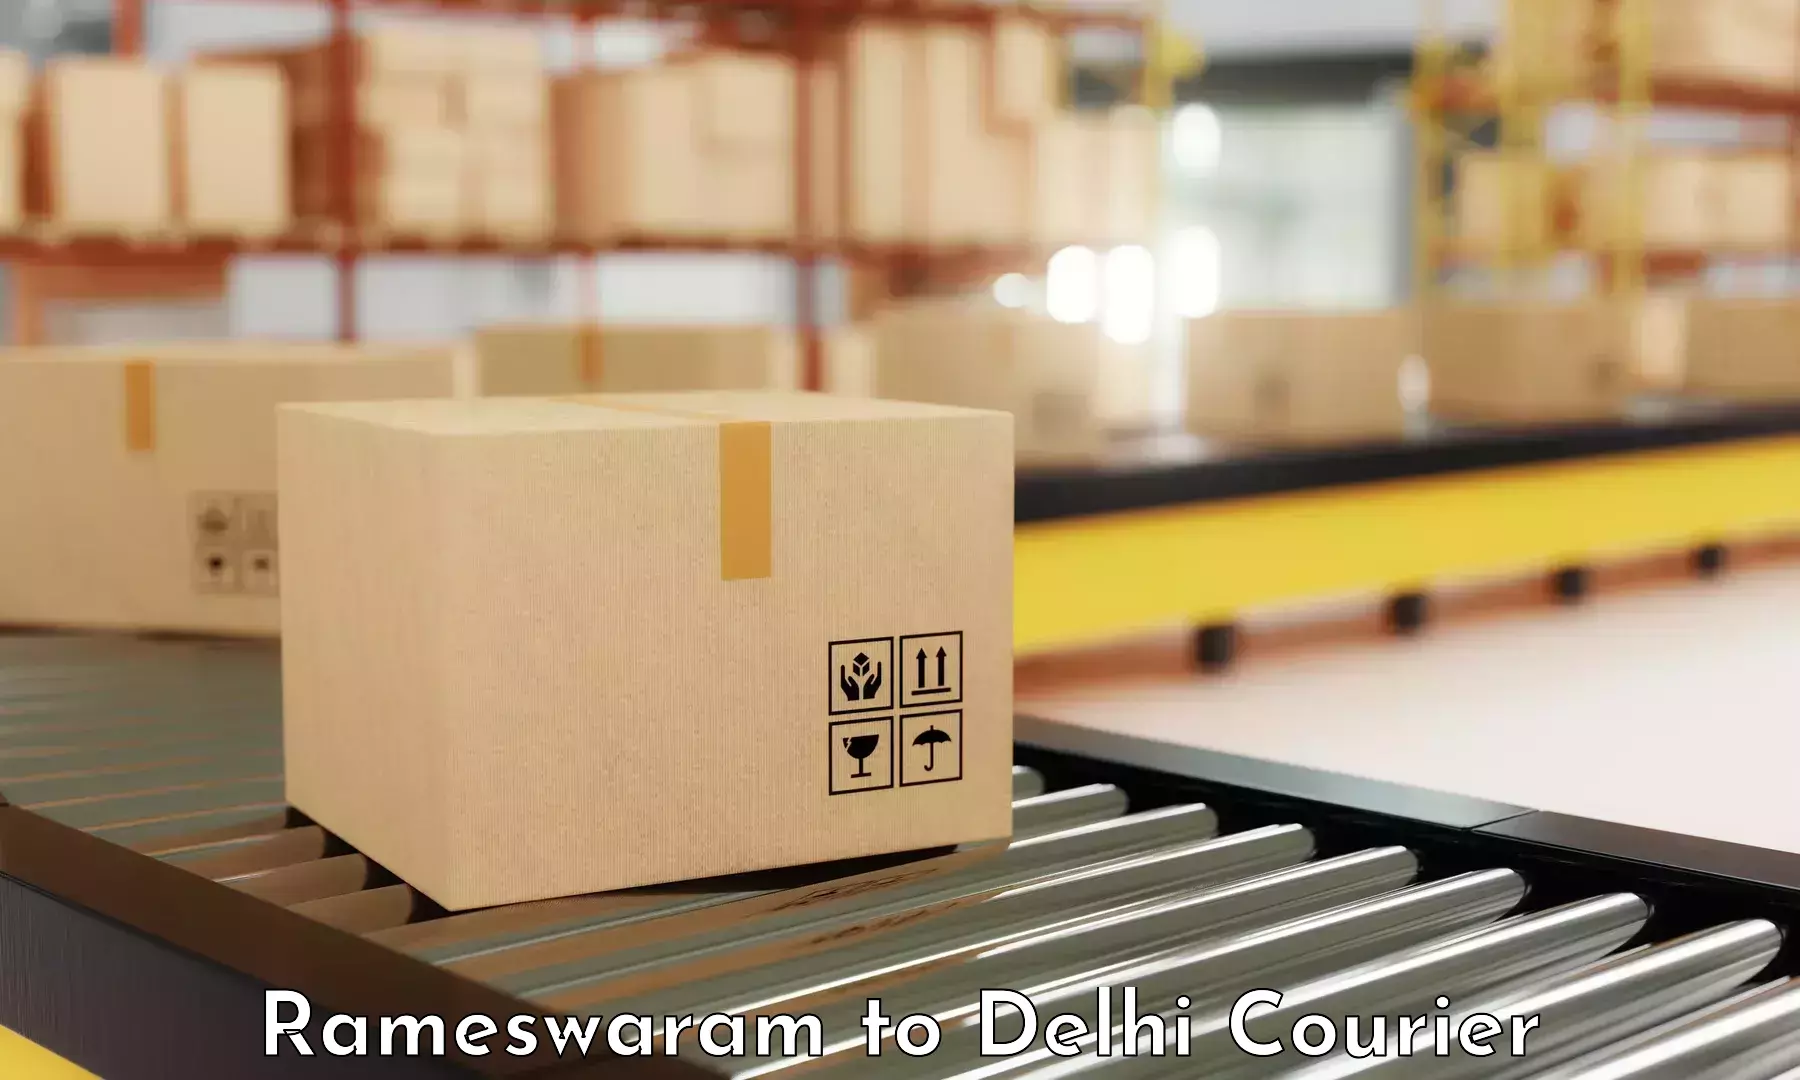 Global shipping networks Rameswaram to University of Delhi